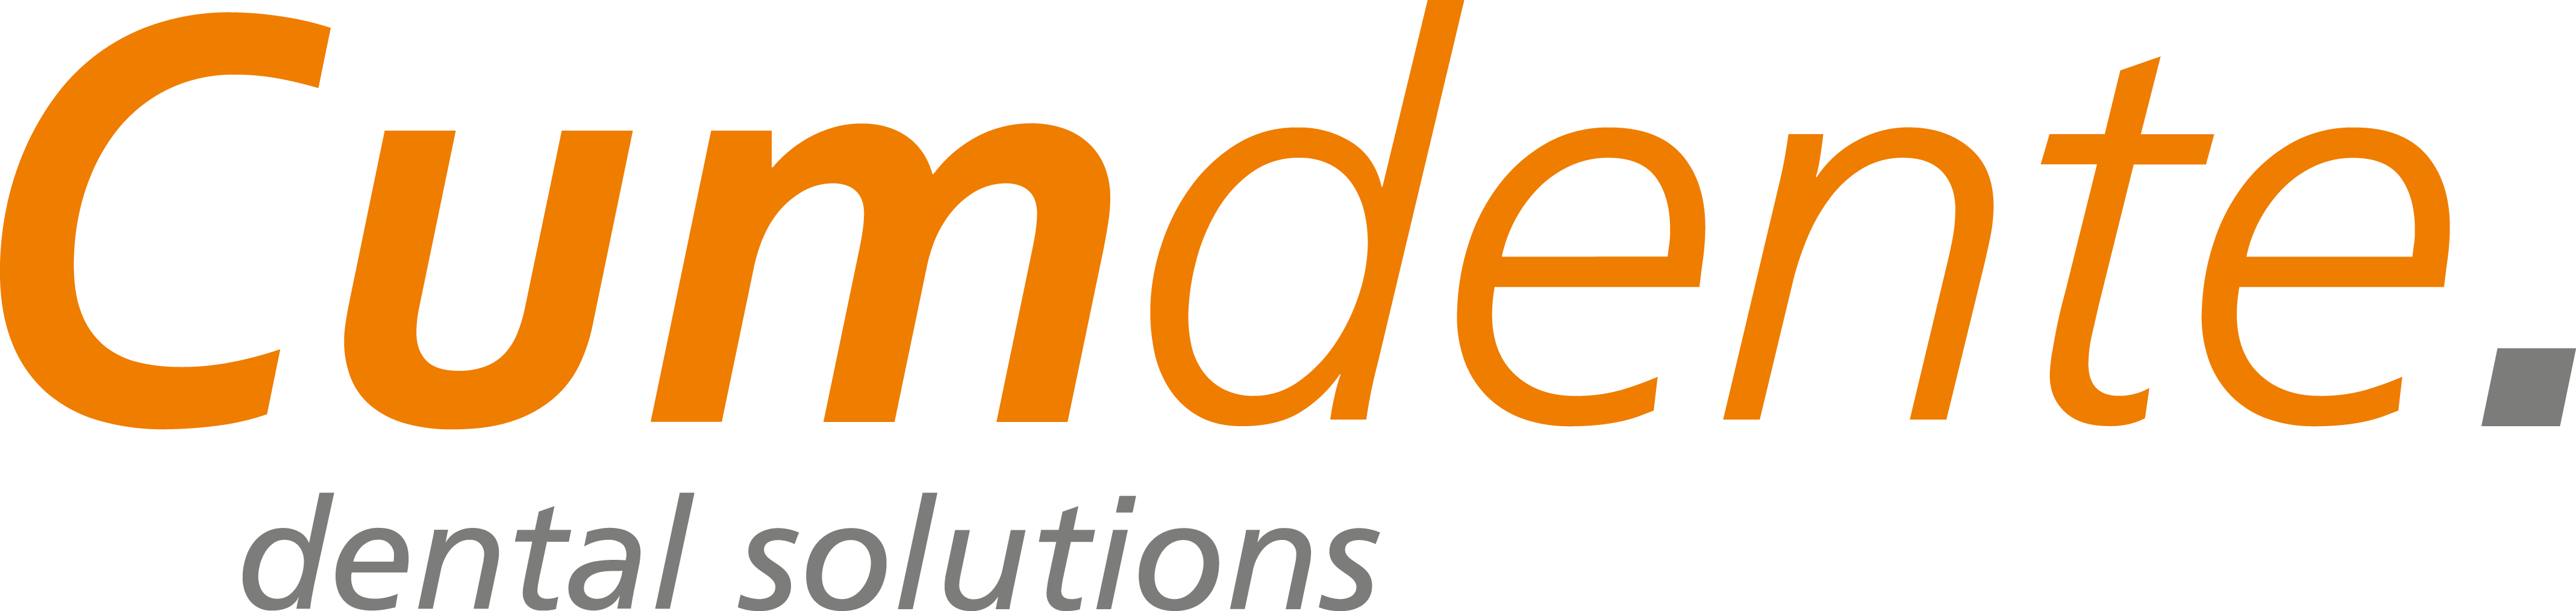 logo Relaunch Cumdente Onlineshop